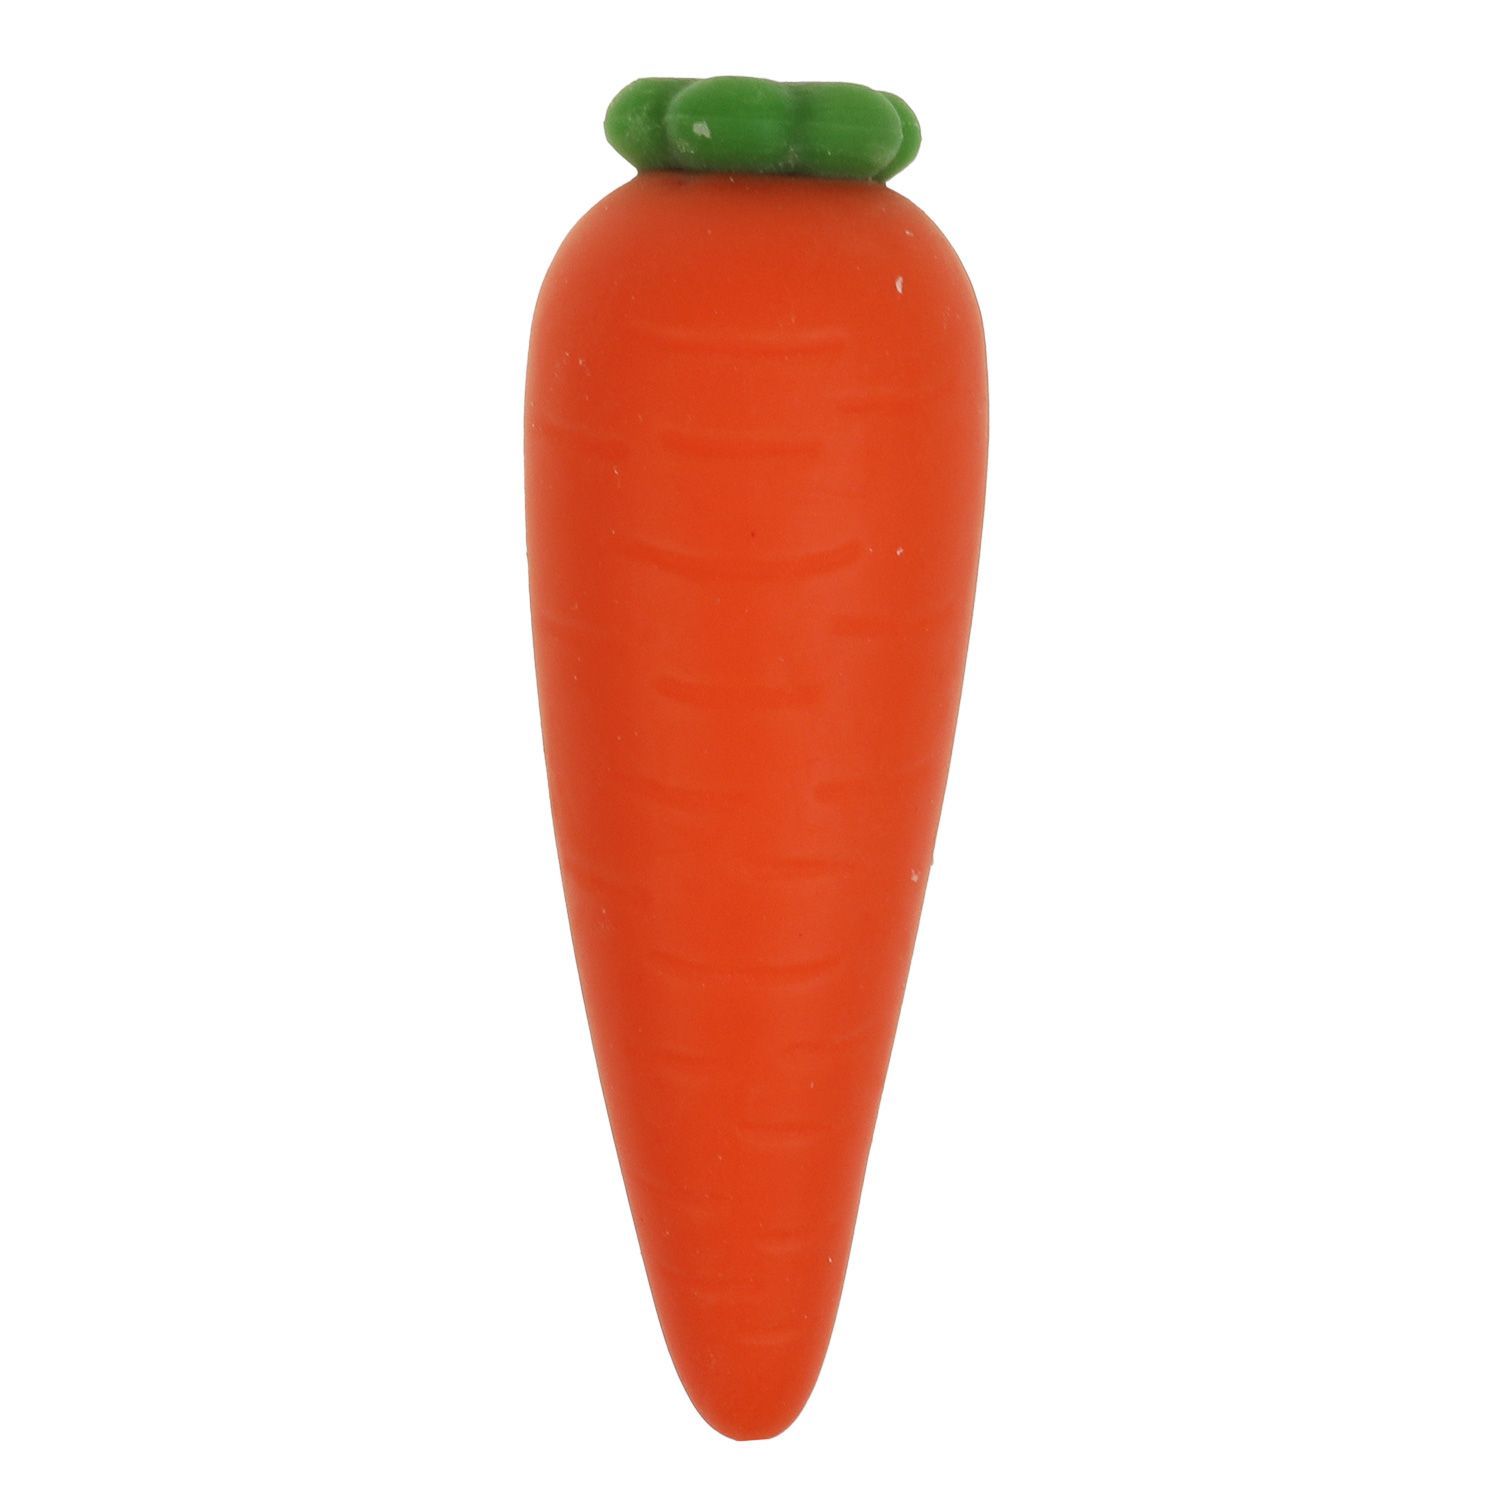 Впереди – морковка!